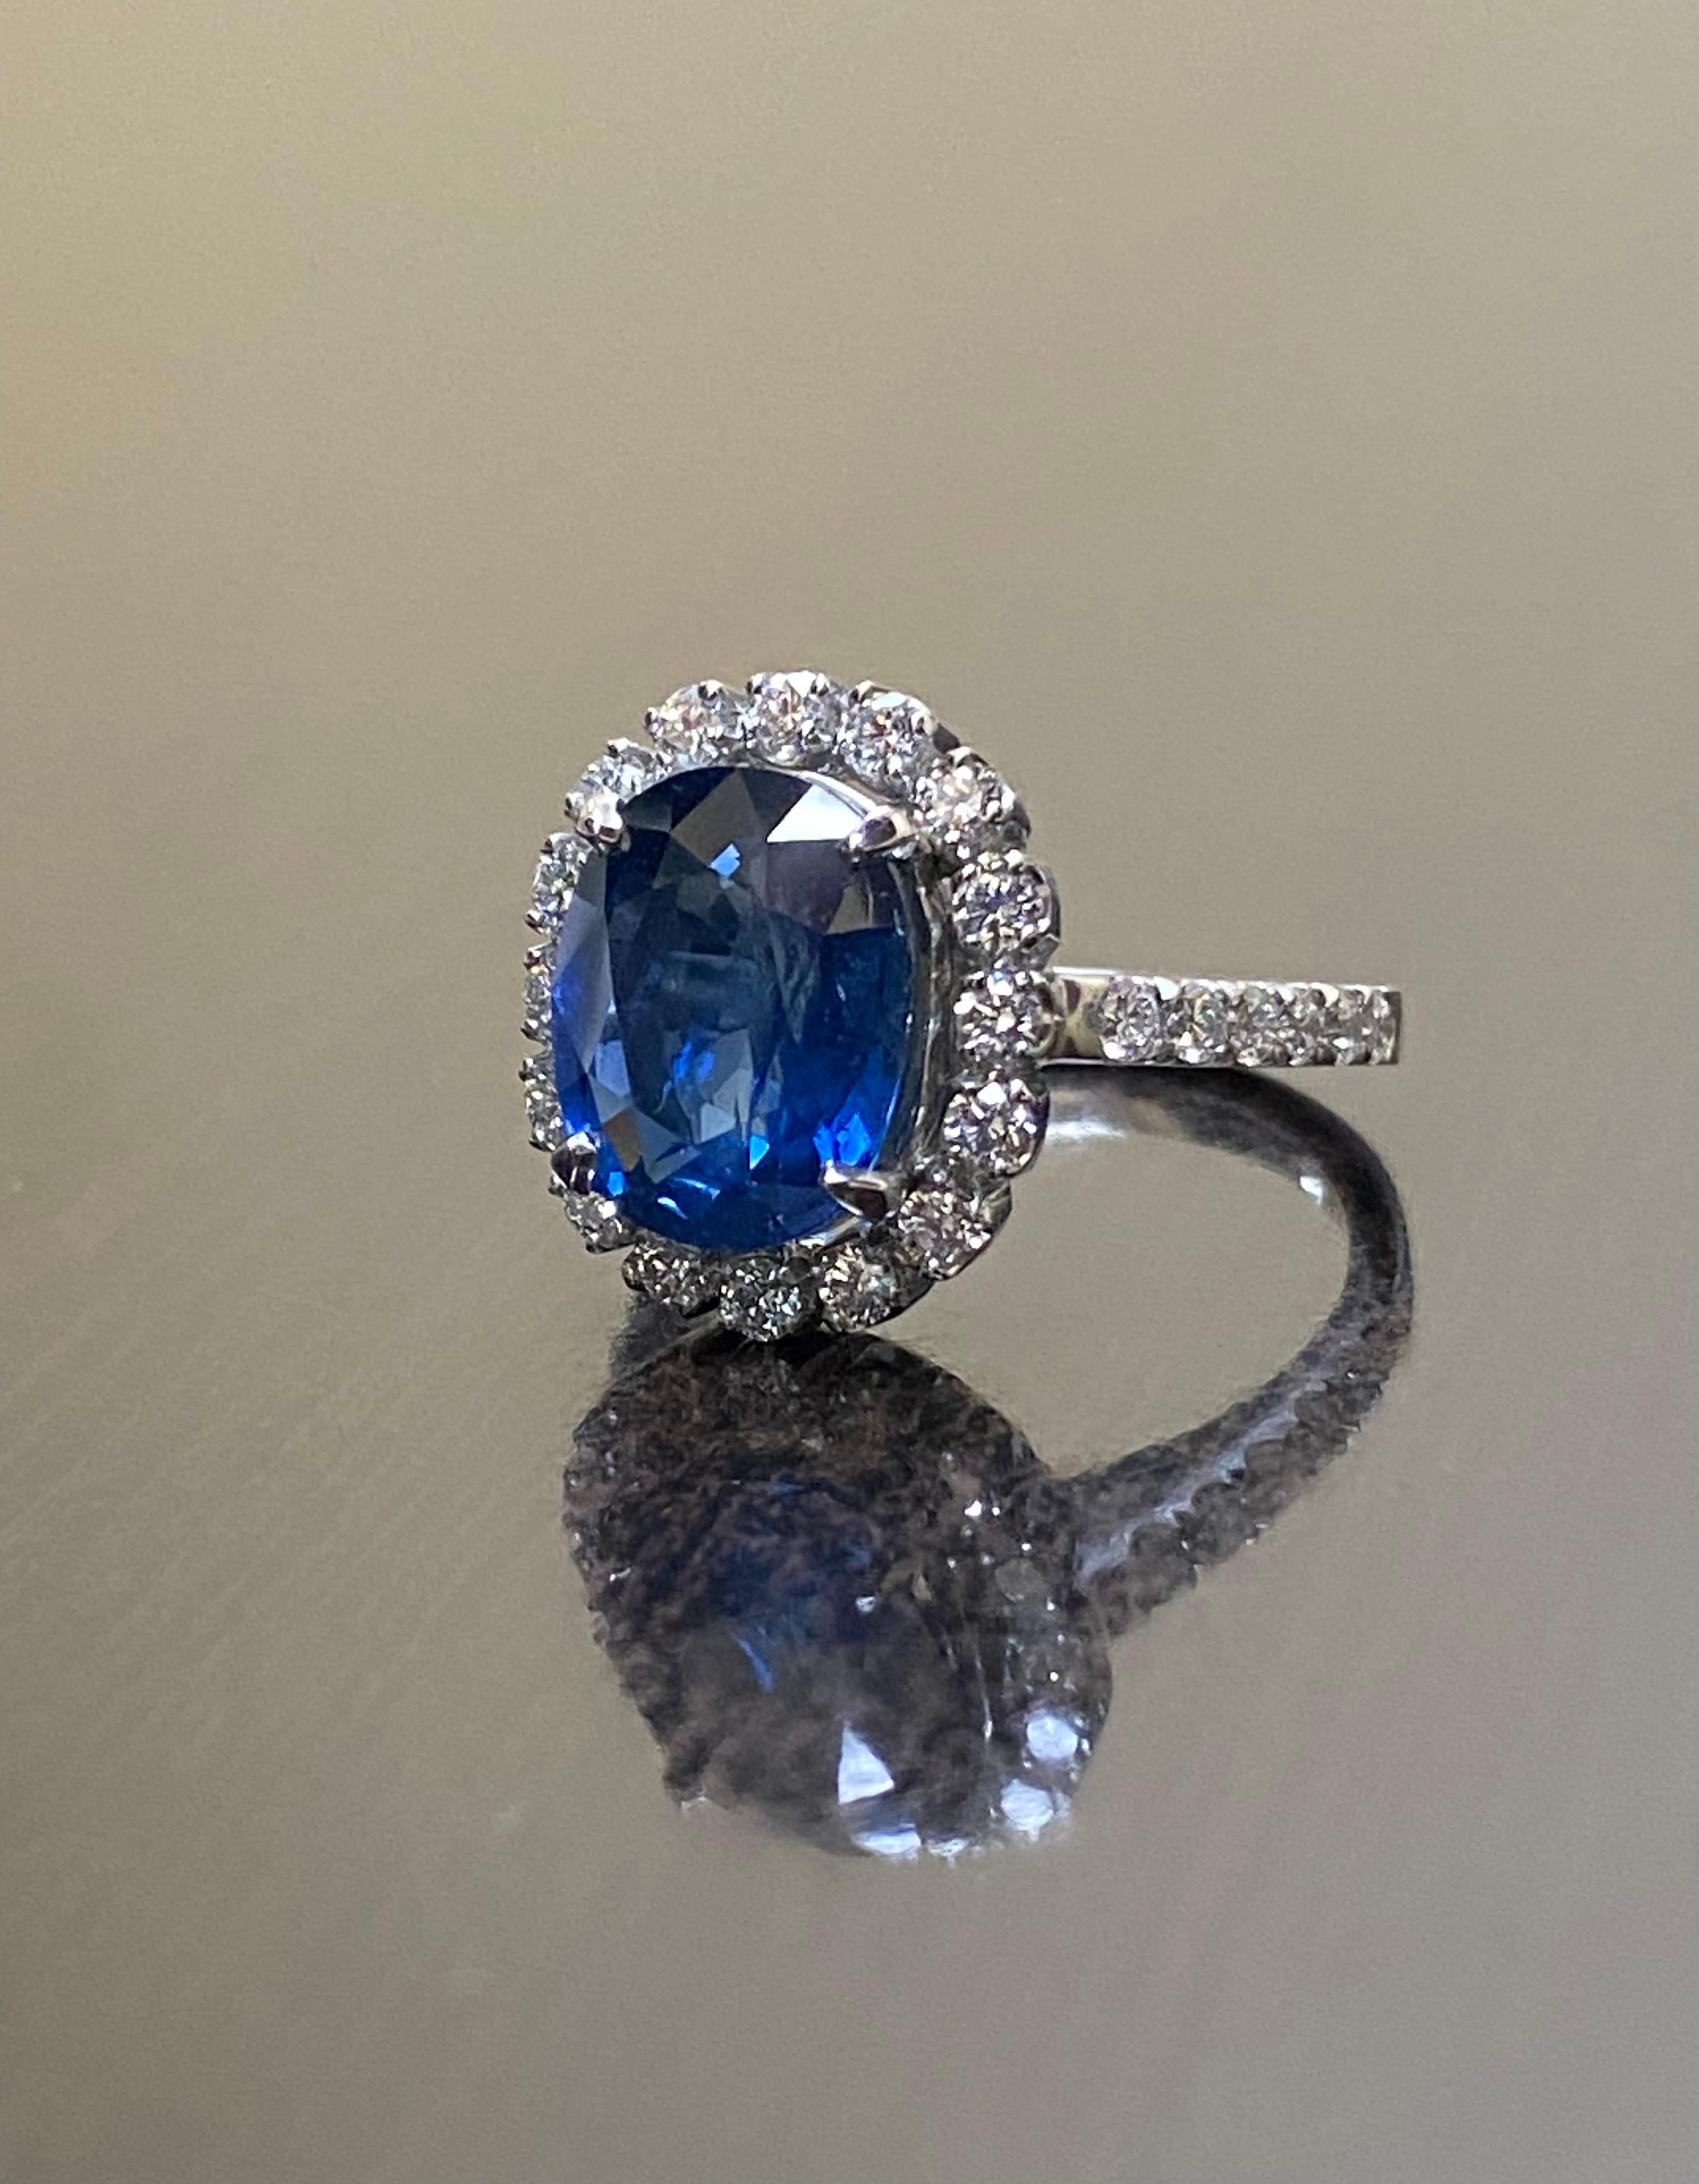 Women's or Men's Art Deco Platinum Diamond GIA Certified 5.33 Carat Oval Blue Sapphire Engagement